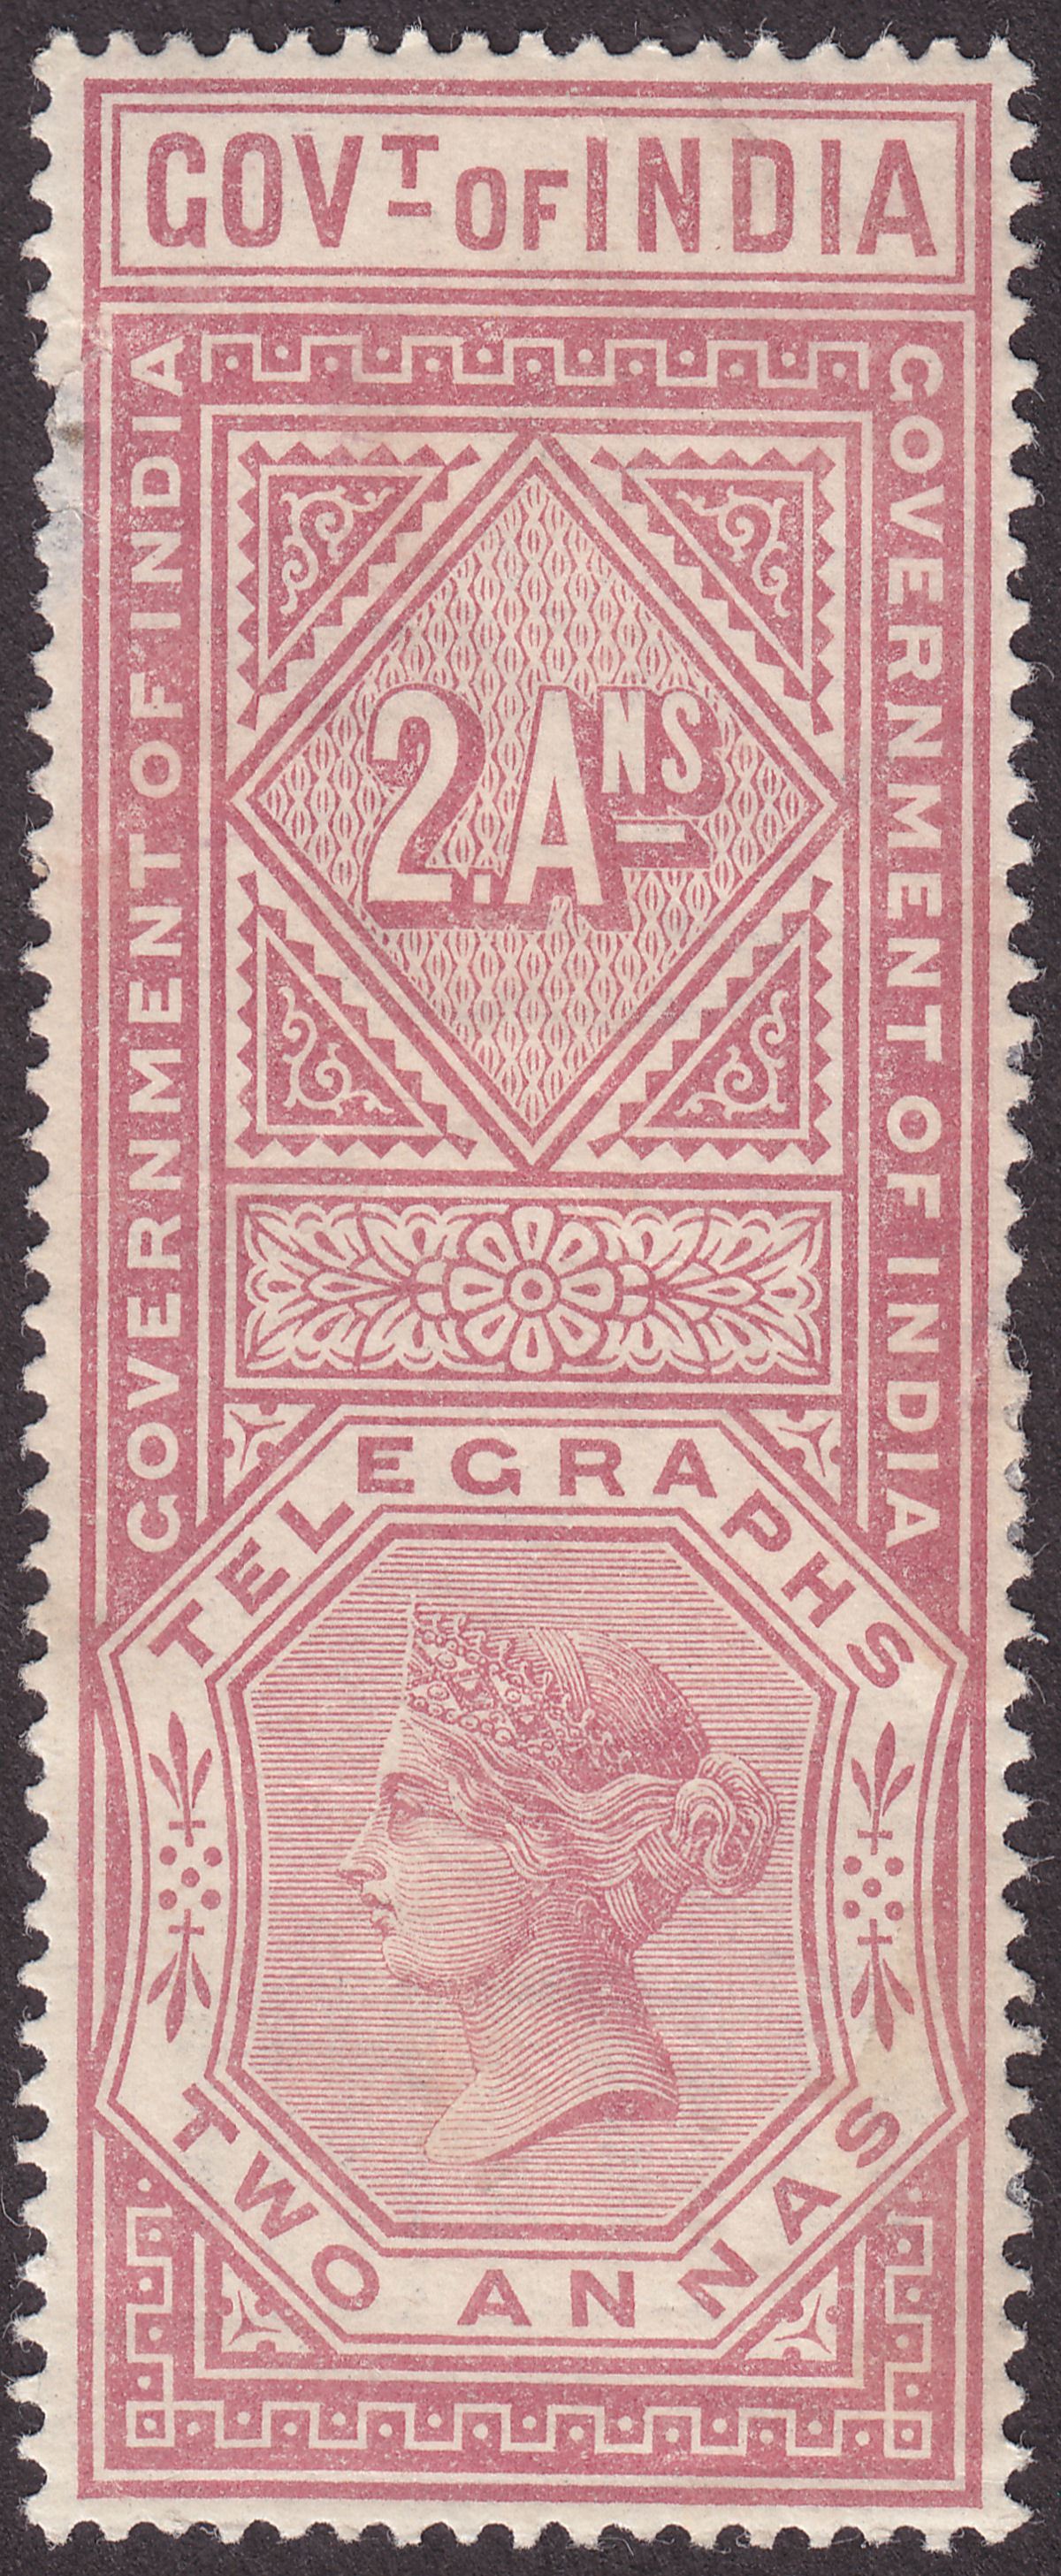 India 1891 QV Telegraph Stamp 2a Maroon Mint SG T43 cat £22 w faults